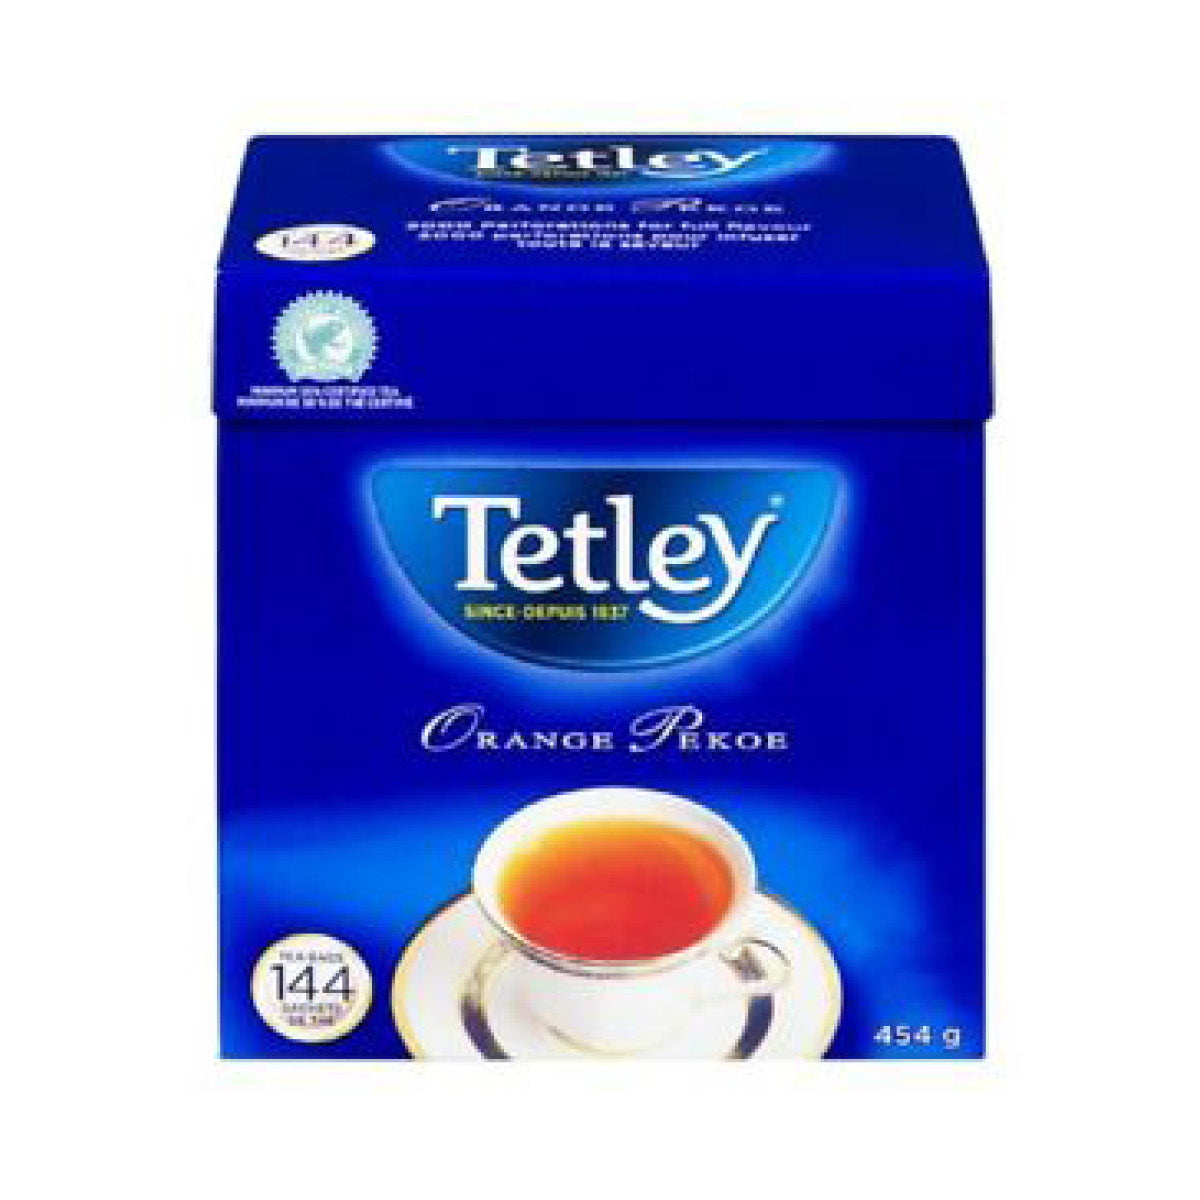 Tetley Orange Pekoe Tea, 144 bags